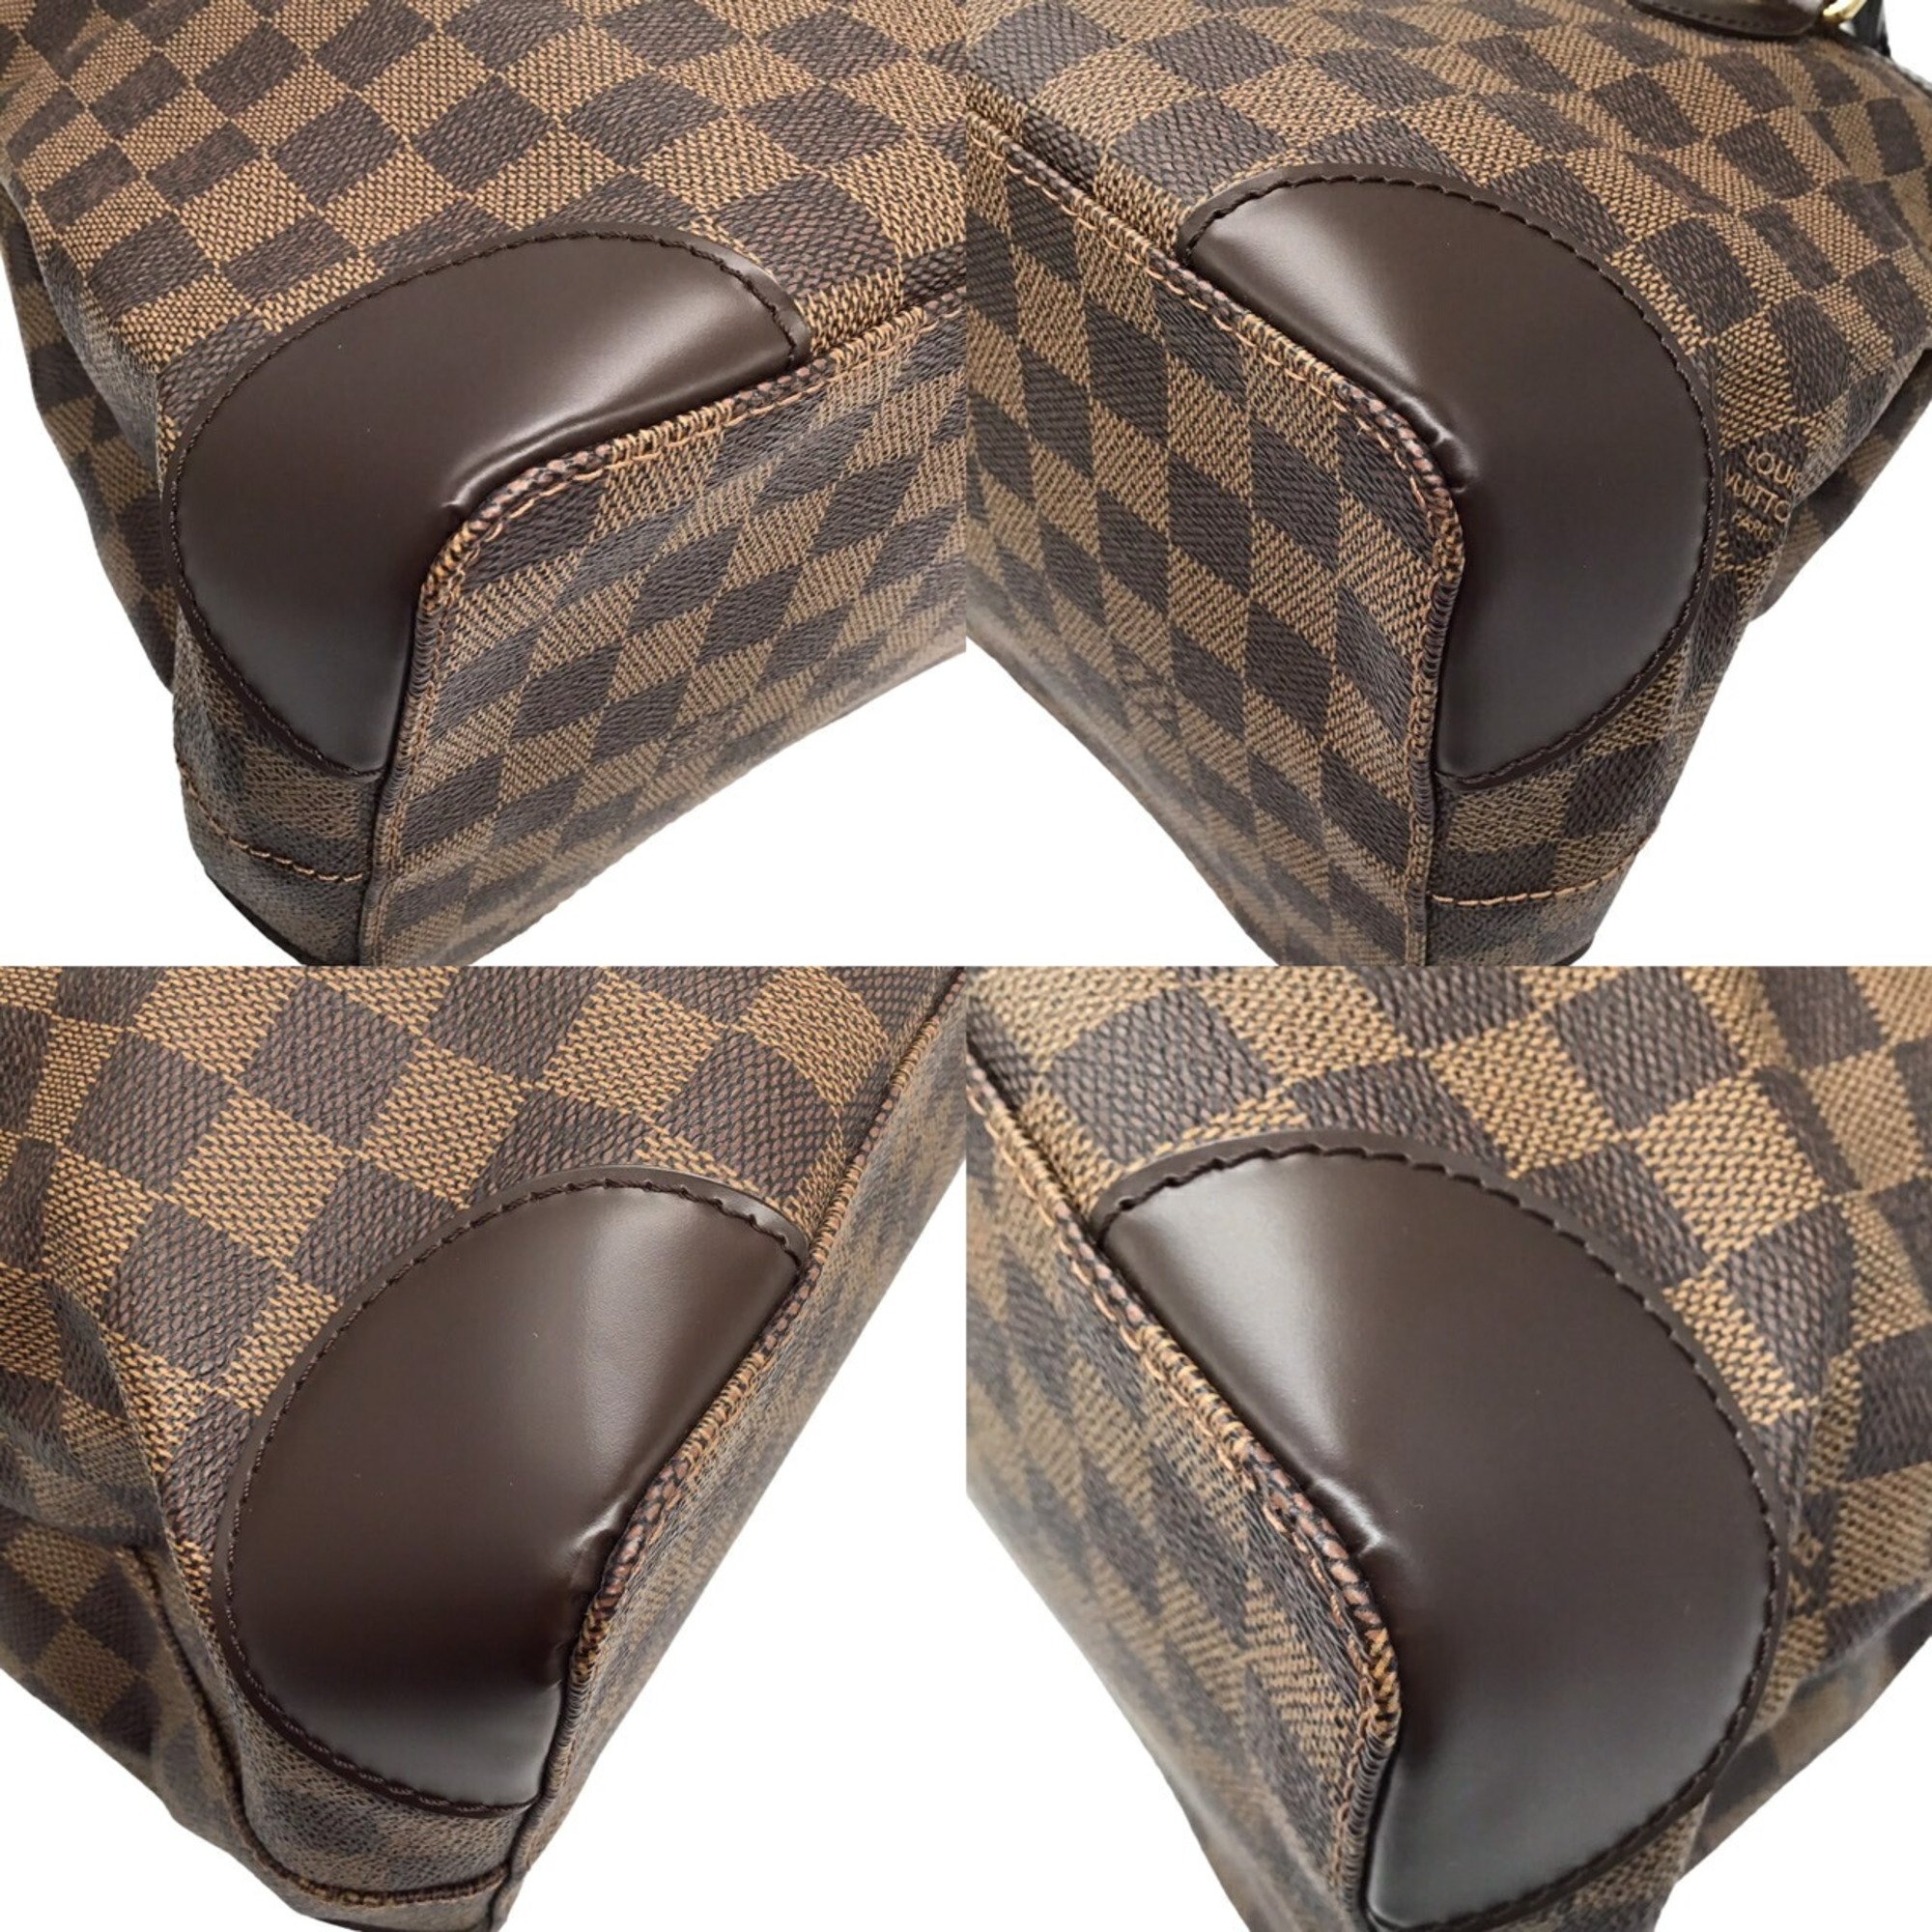 LOUIS VUITTON Louis Vuitton Damier Hampstead PM N51205 MI5008 Handbag Bag Tote Canvas Leather Brown G Hardware Ladies